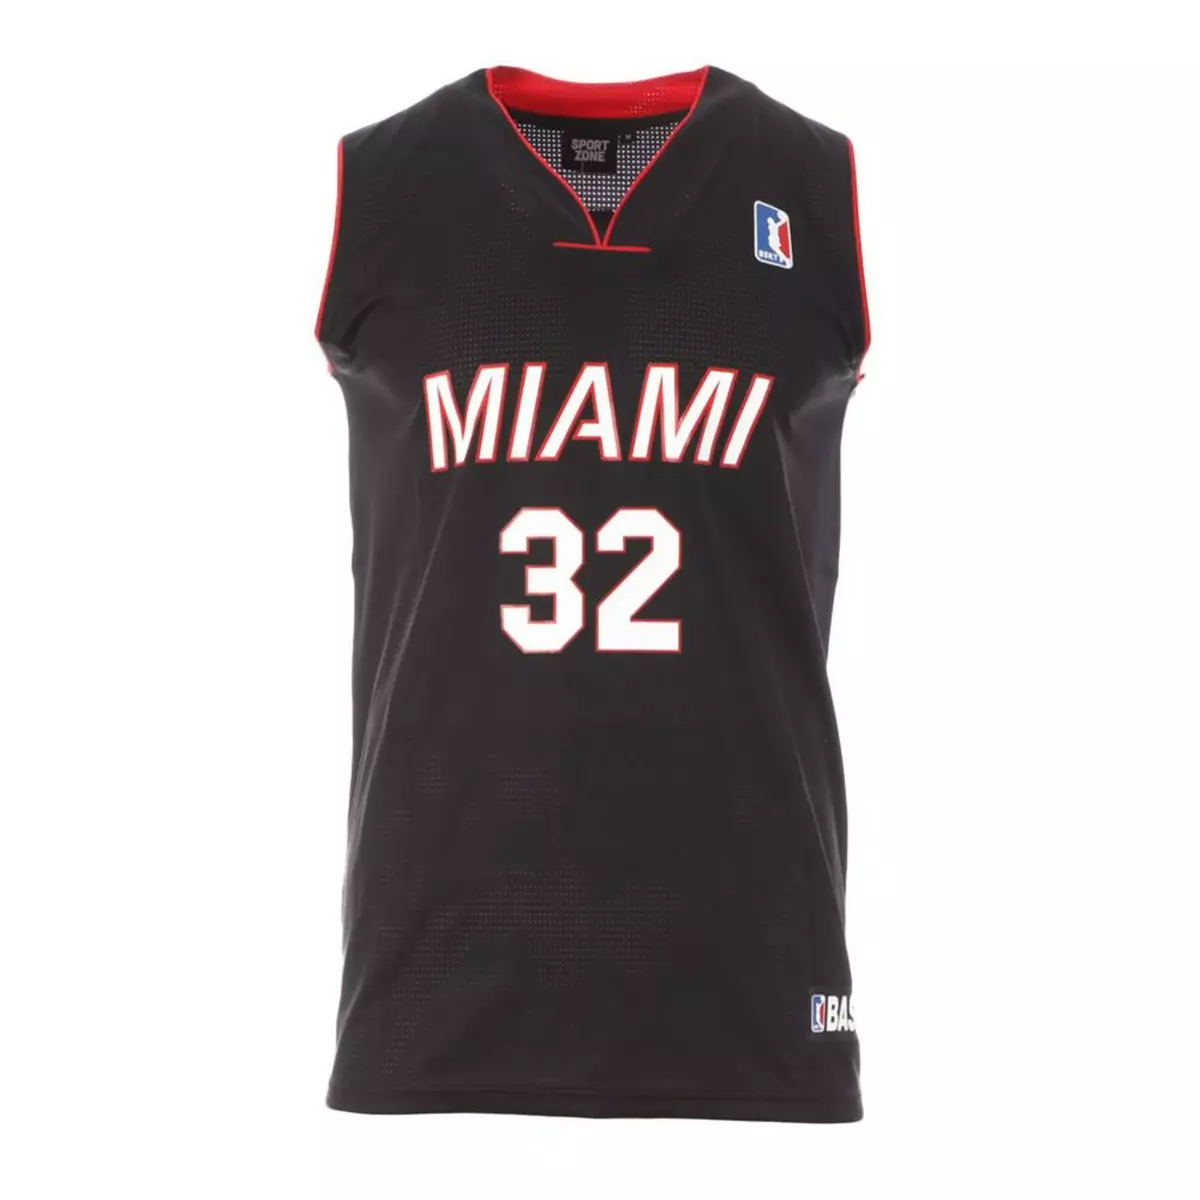  Miami Maillot de basket Noir Homme Sport Zone Miami 32